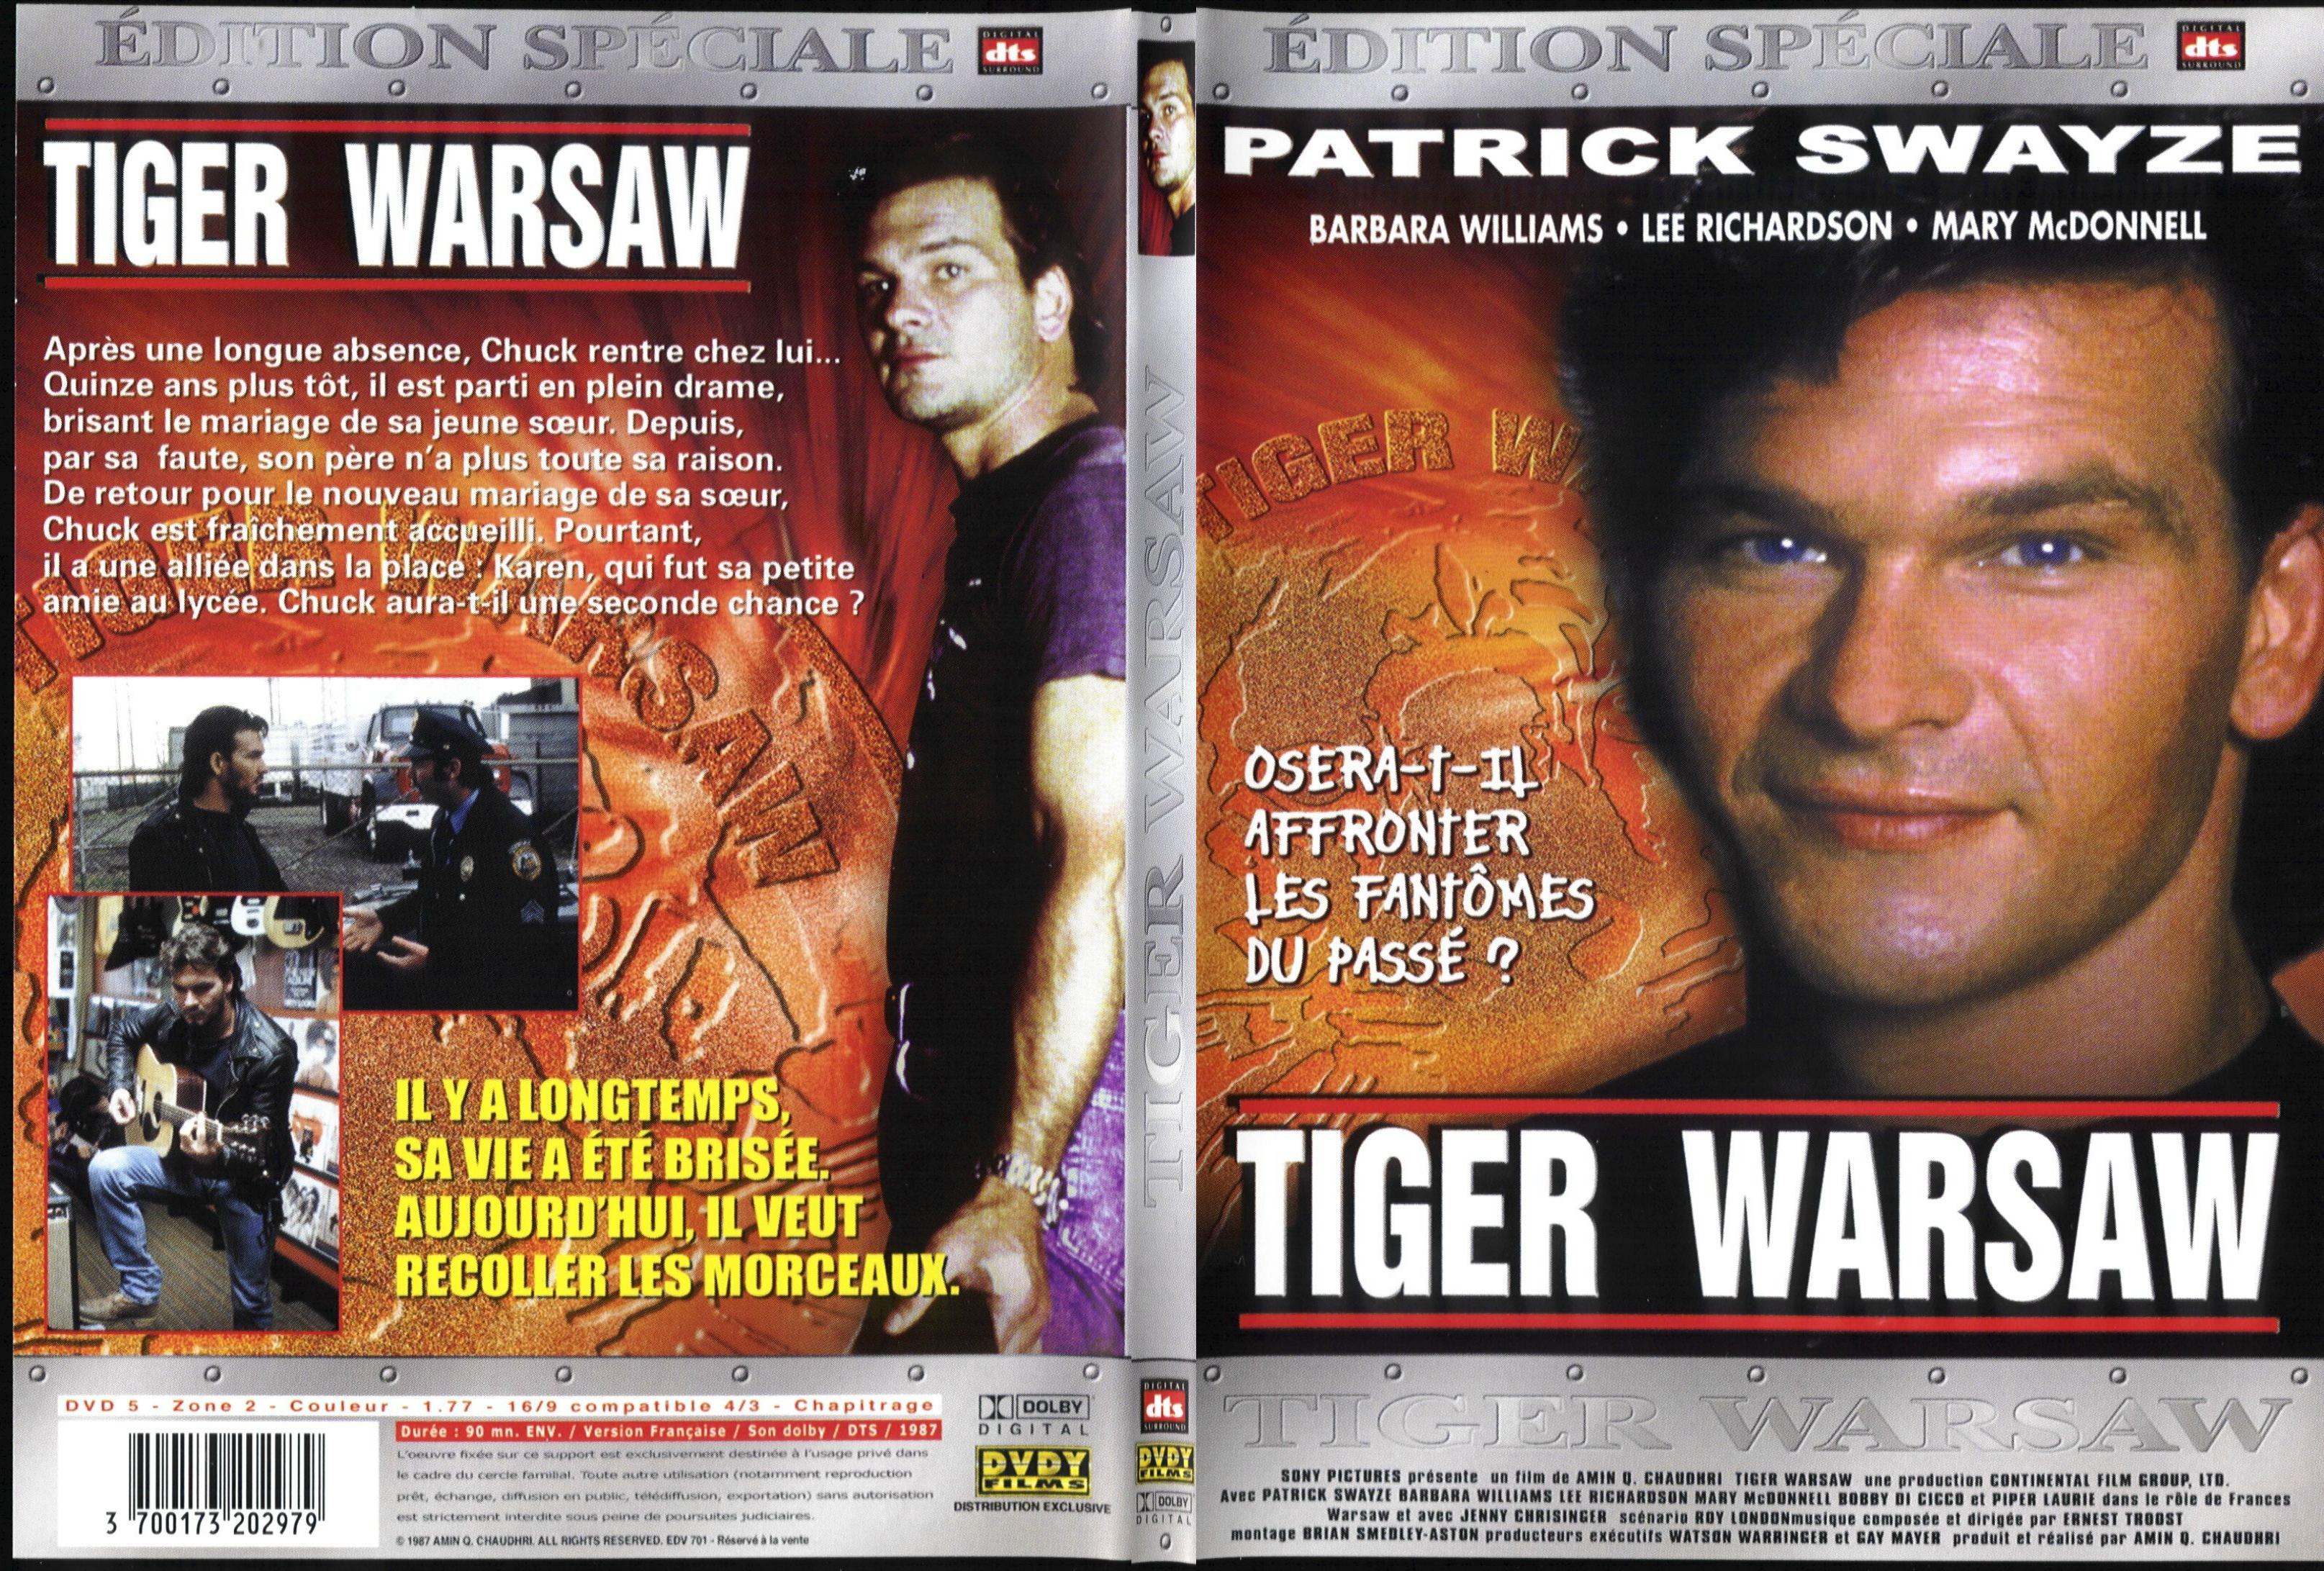 Jaquette DVD Tiger Warsaw - SLIM